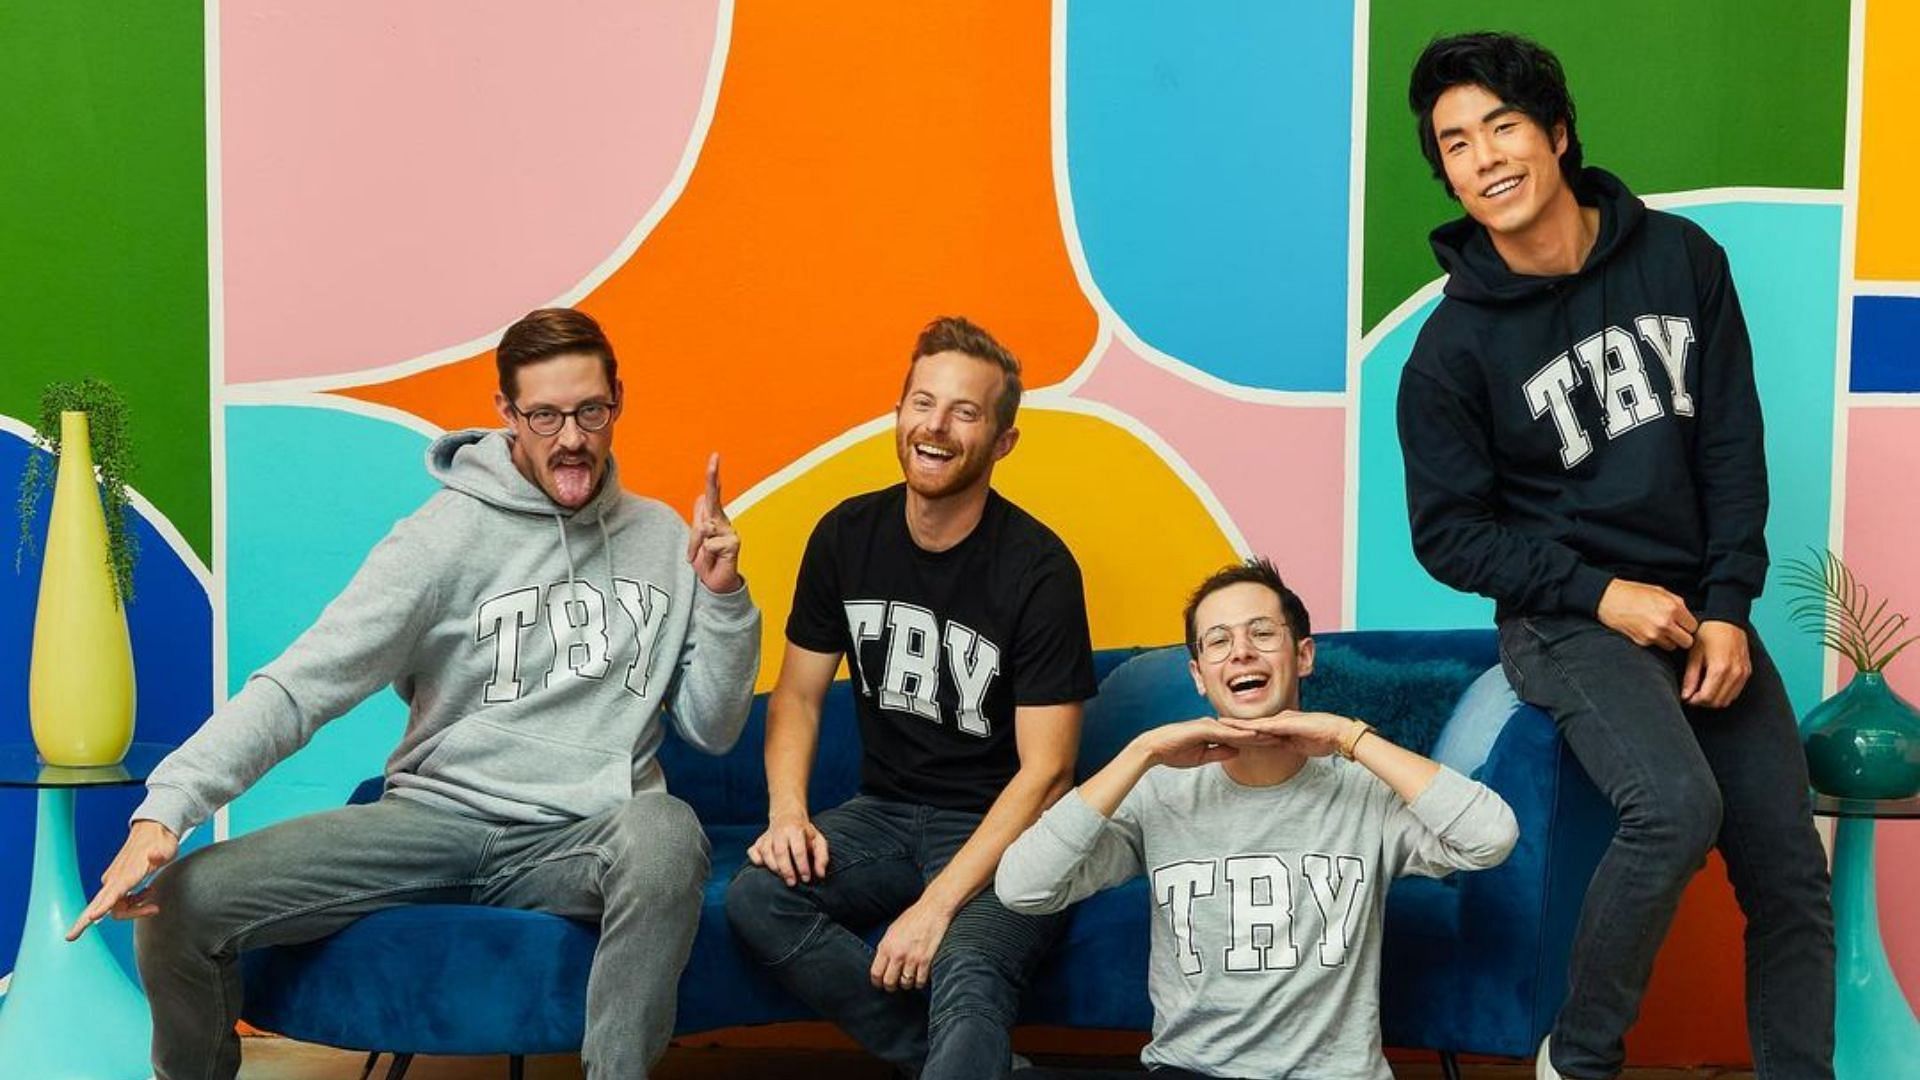 The Try Guys comprise Ned Fulmer, Zach Kornfeld, Eugene Lee Yang, and Kedith Habersberger. (Image via Instagram/@tryguys)